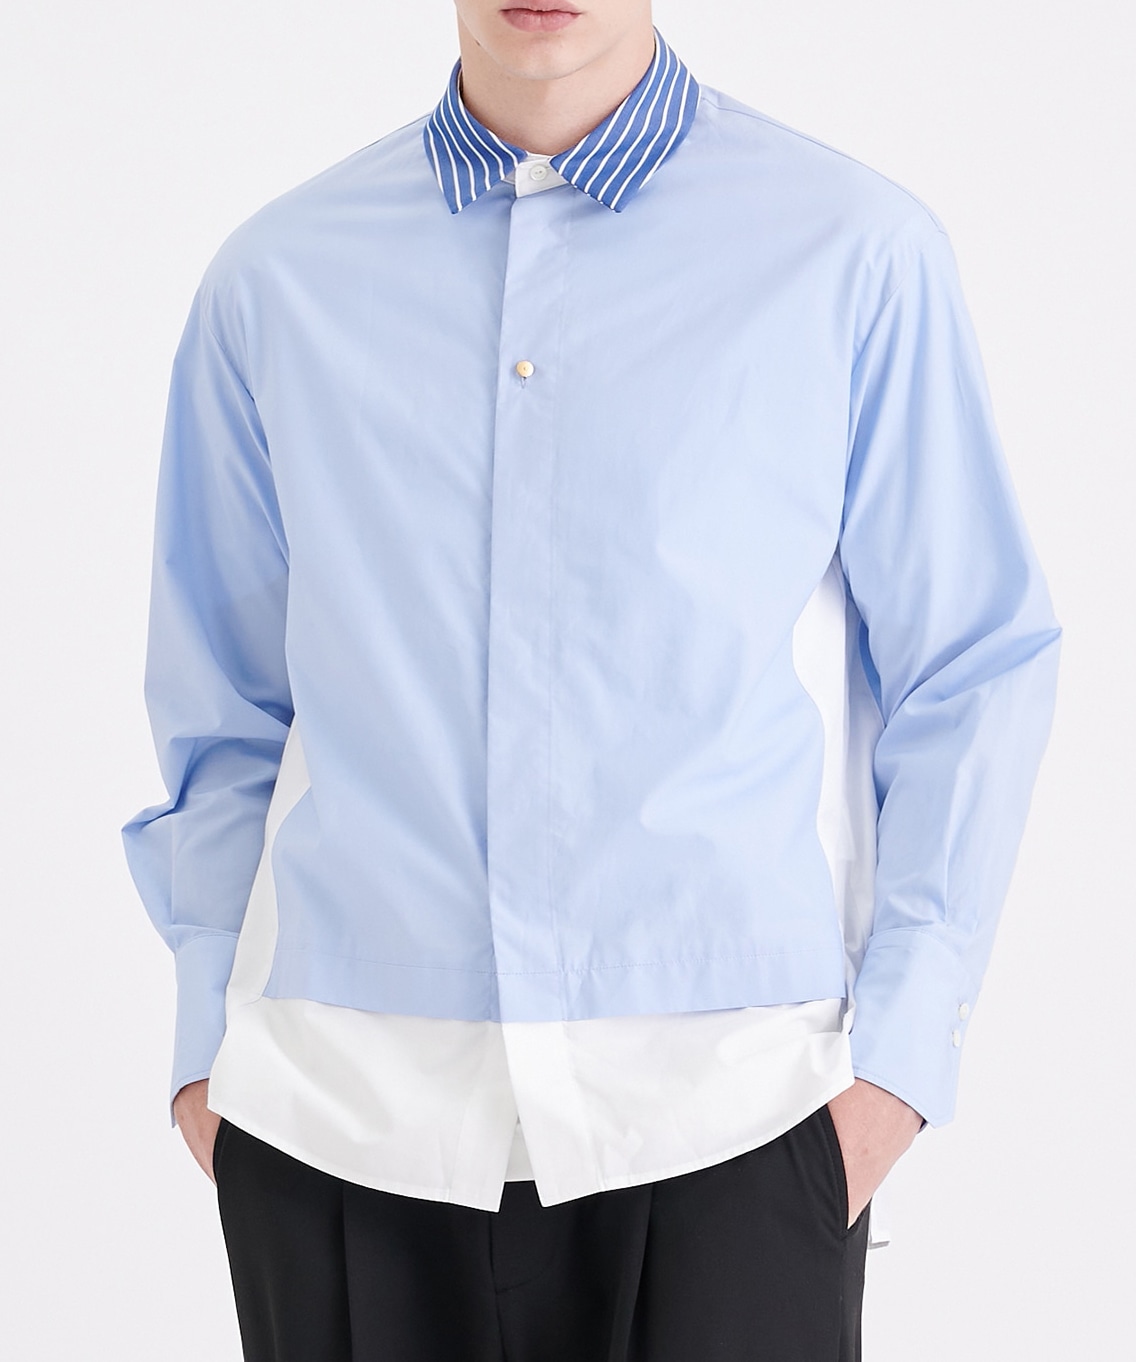 CULLNI Stripe High Count Cotton Shirt